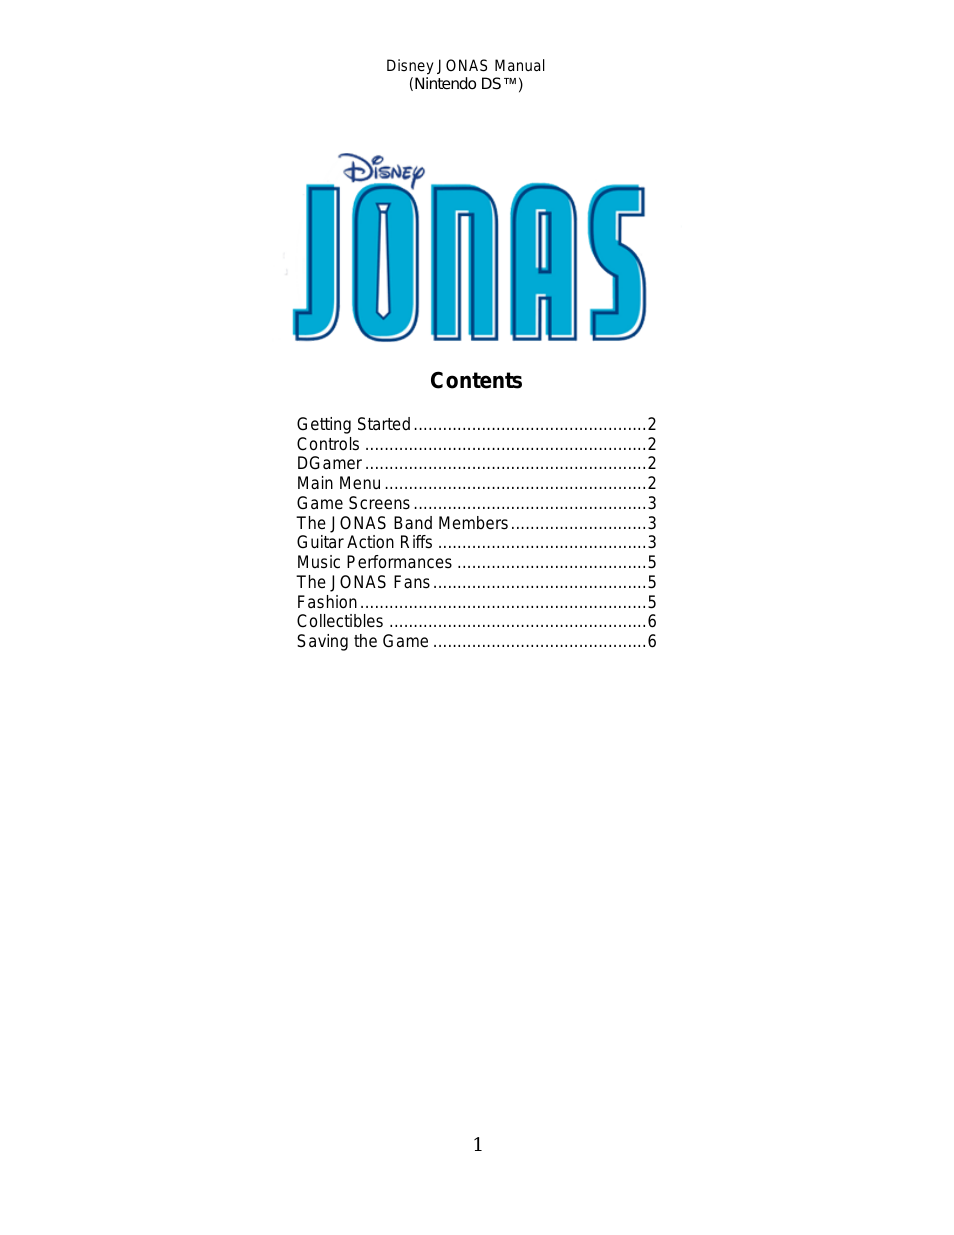 Jonas for Nintendo DS